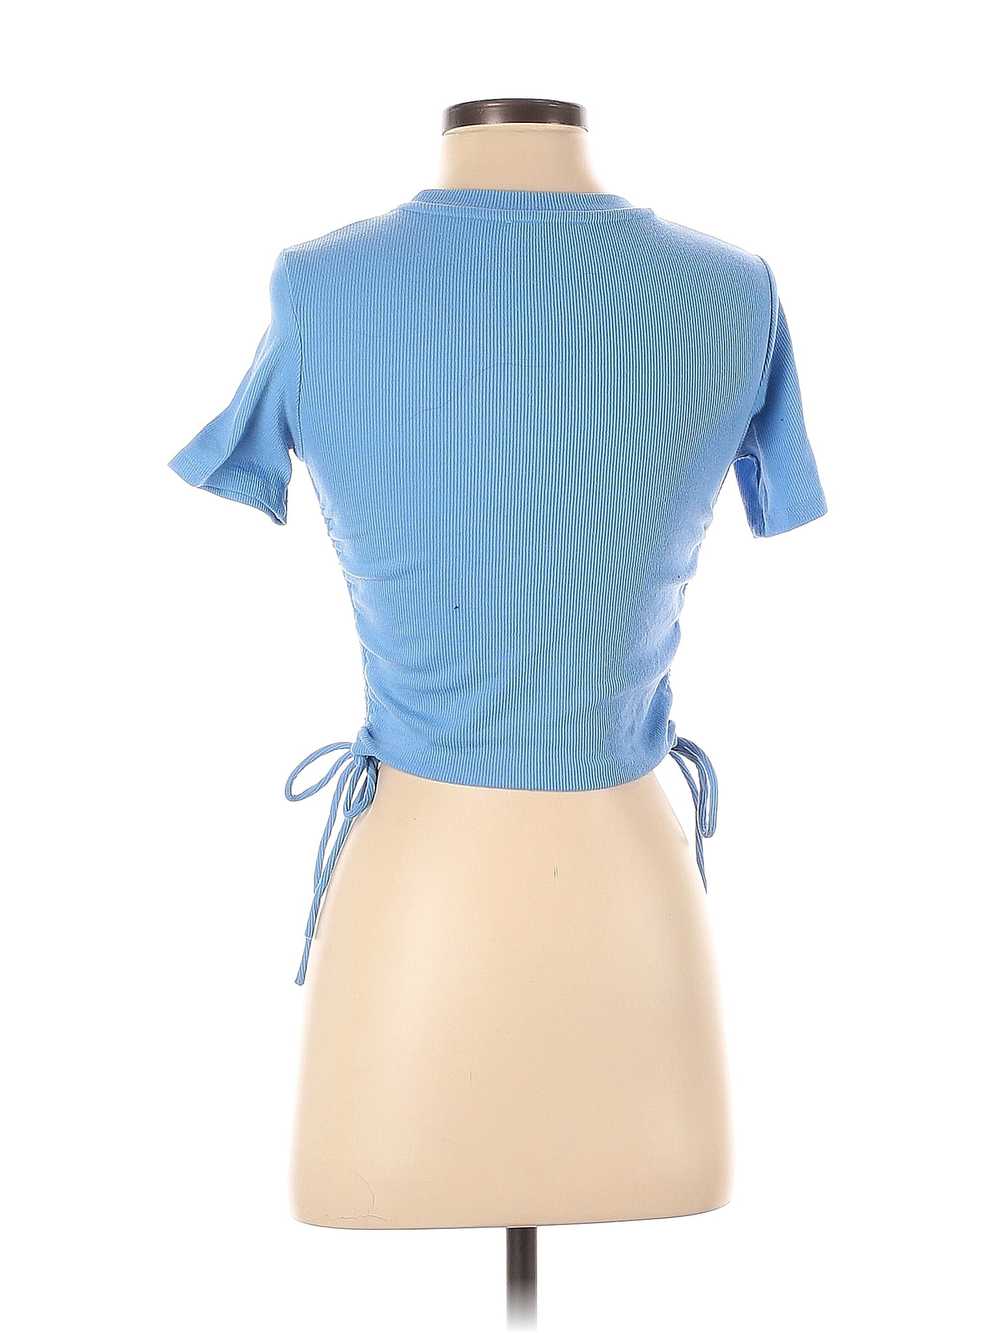 Zara Women Blue Short Sleeve Top S - image 2